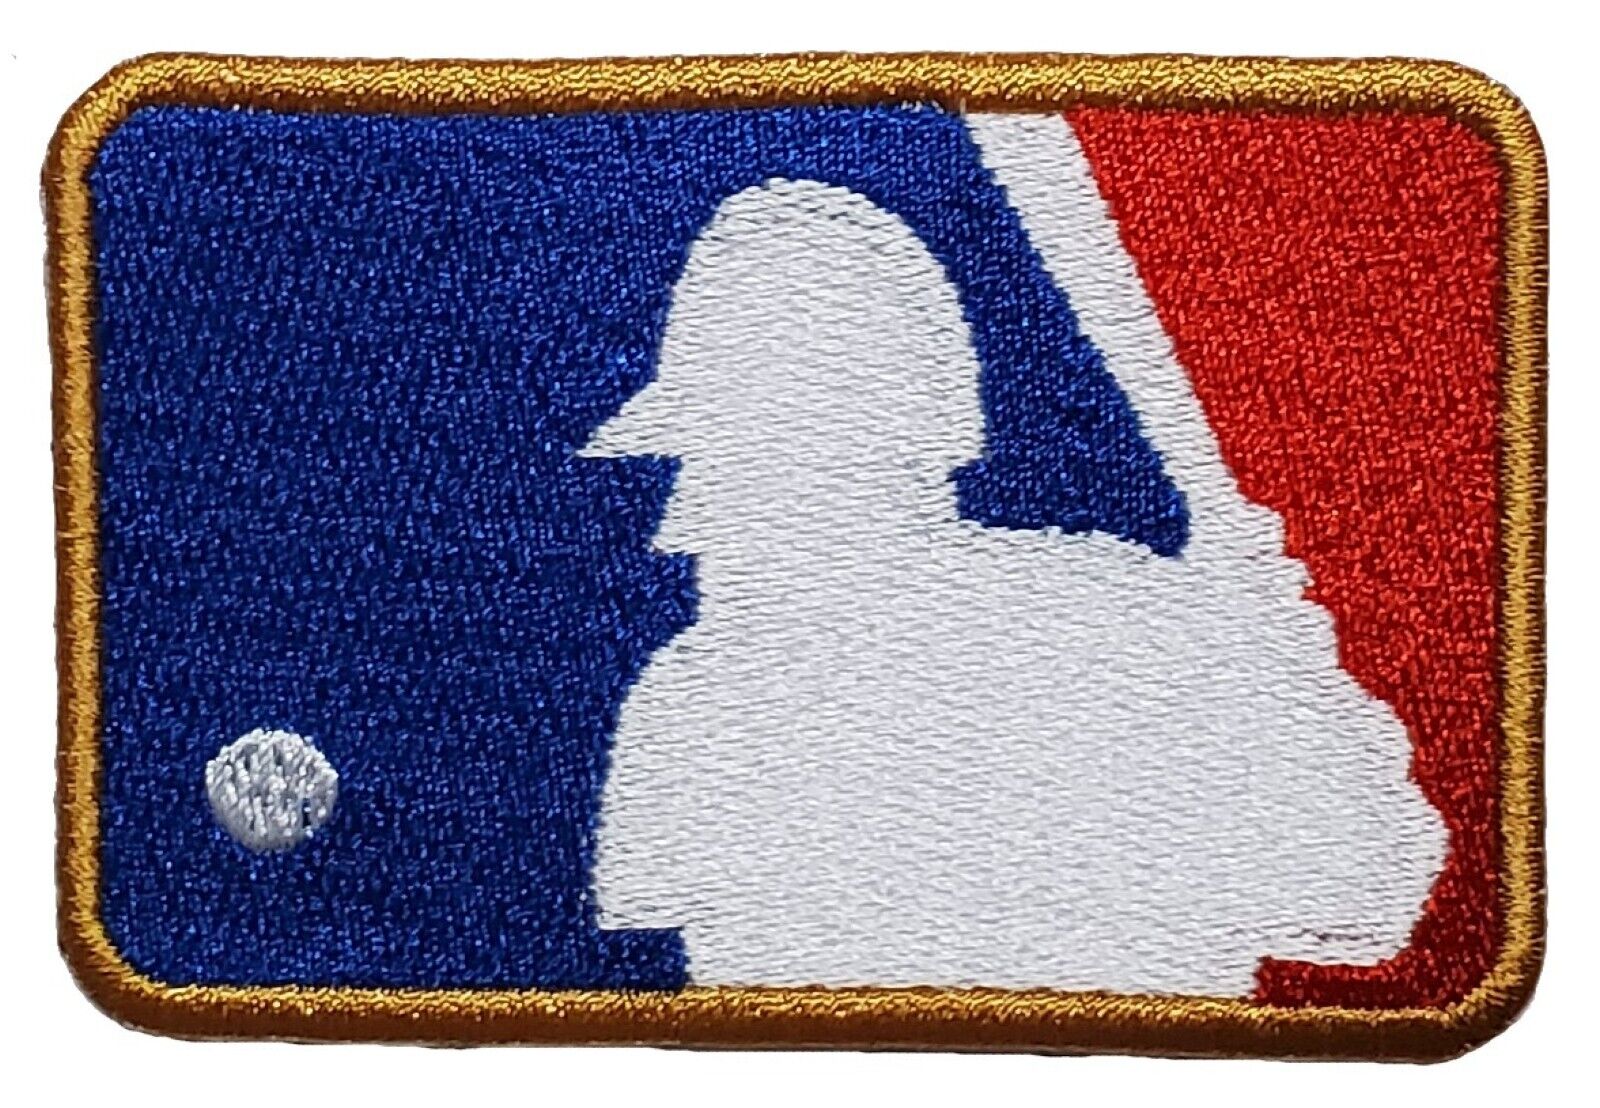 Batterman Logo World Series MLB Baseball Fully Embroidered Iron On Patch